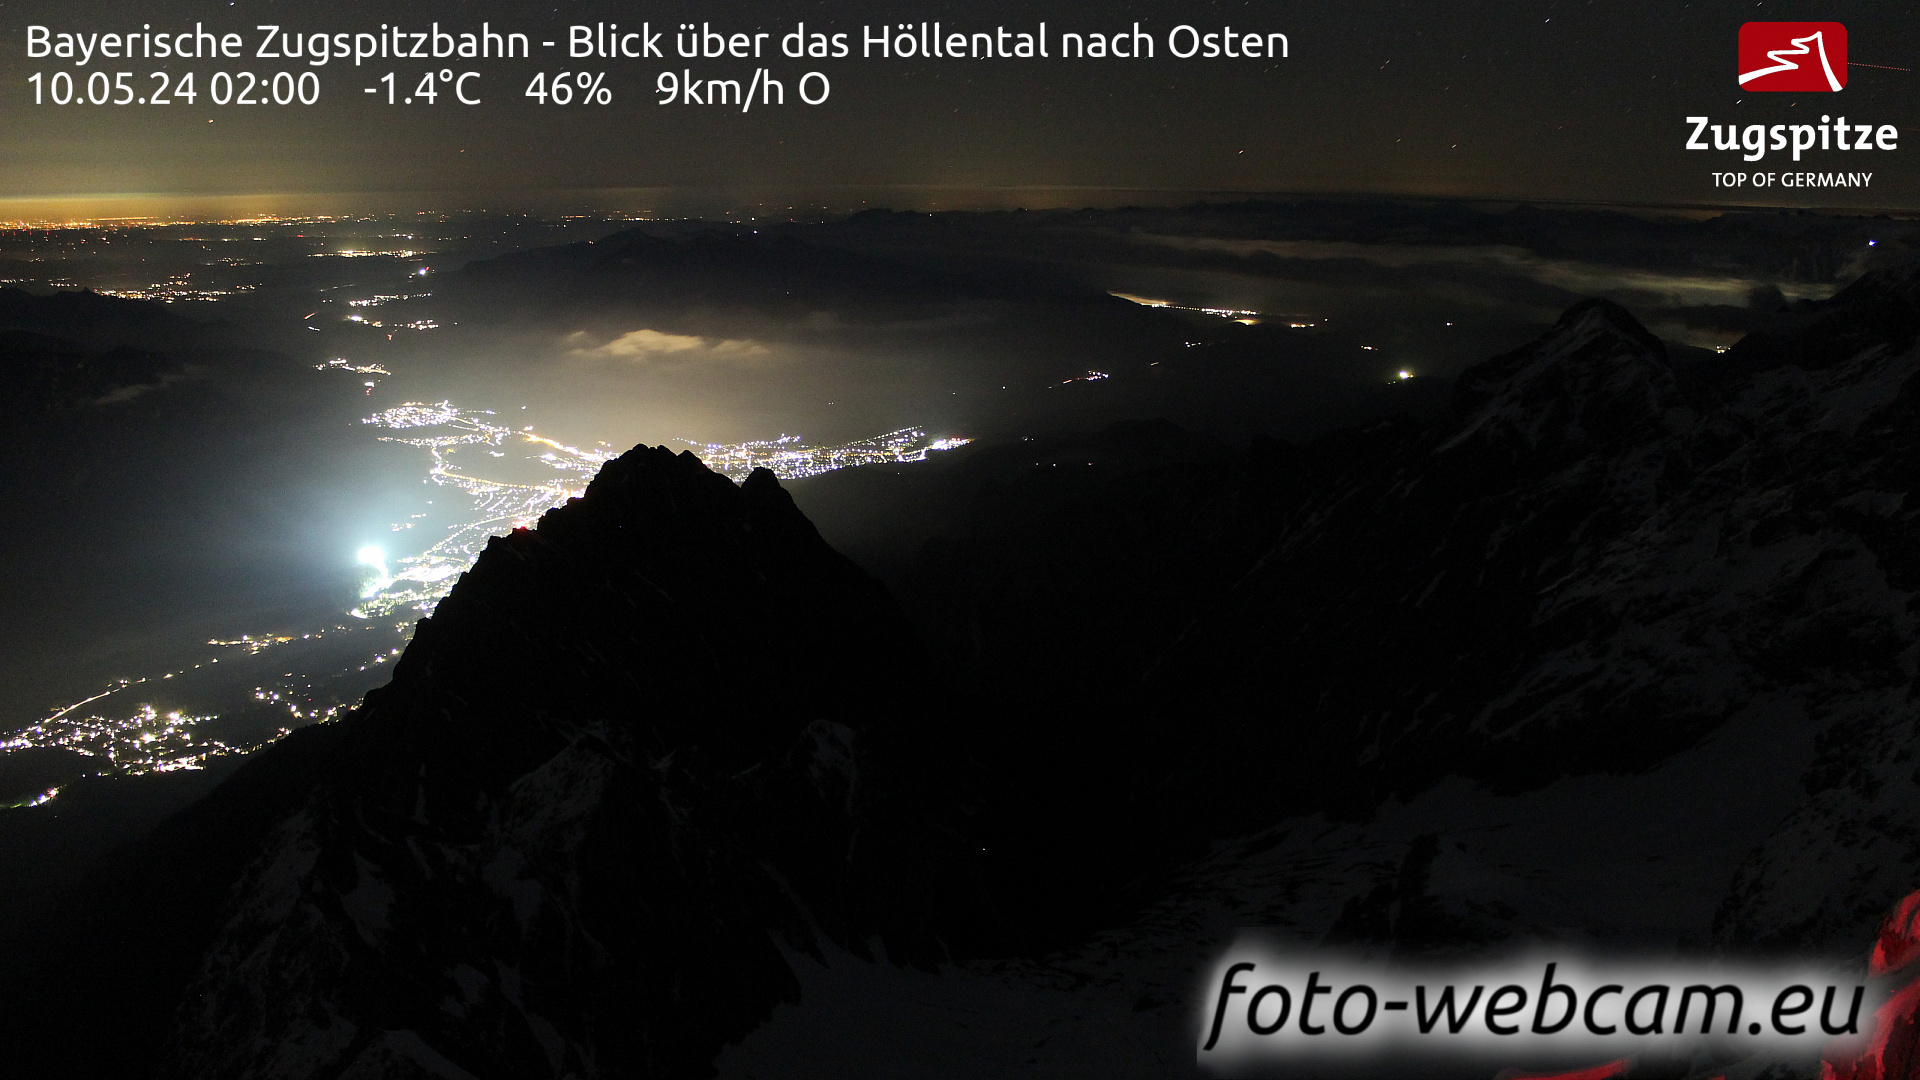 Zugspitze Dom. 02:05